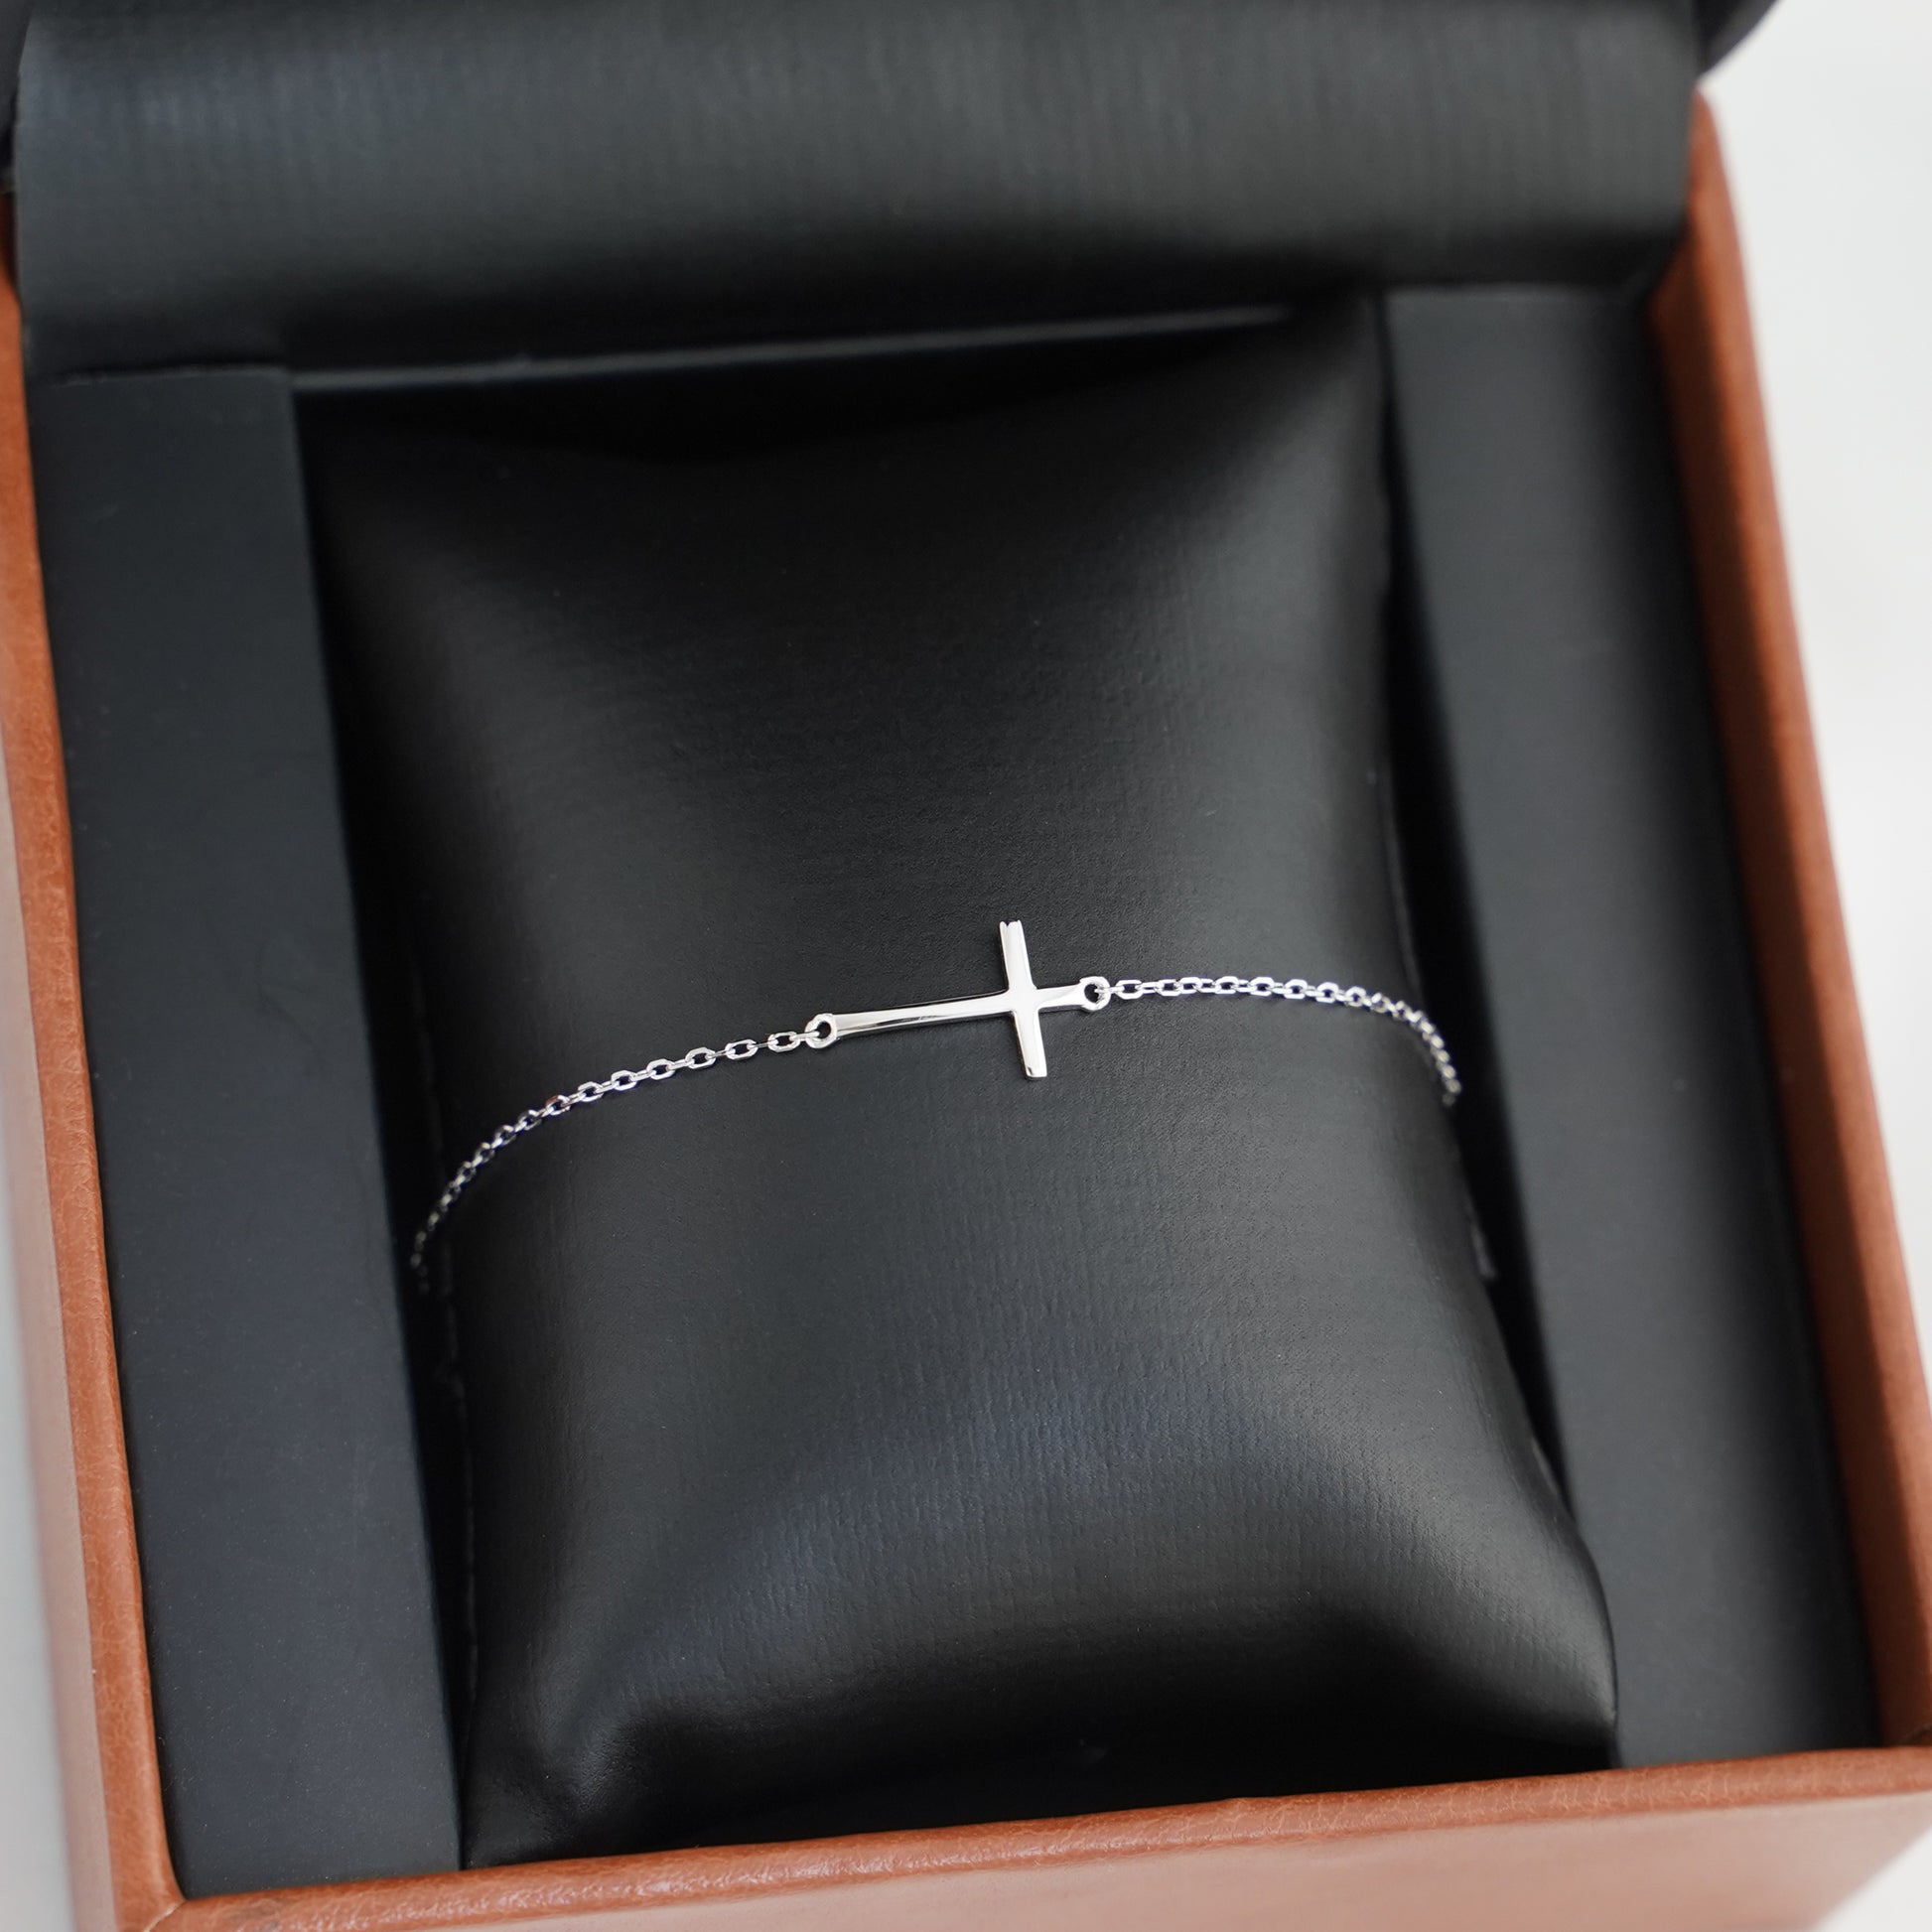 Sterling Silver Horizontal Sideways Layer Cross Chain Bracelet Anklet 19-22cm - sugarkittenlondon